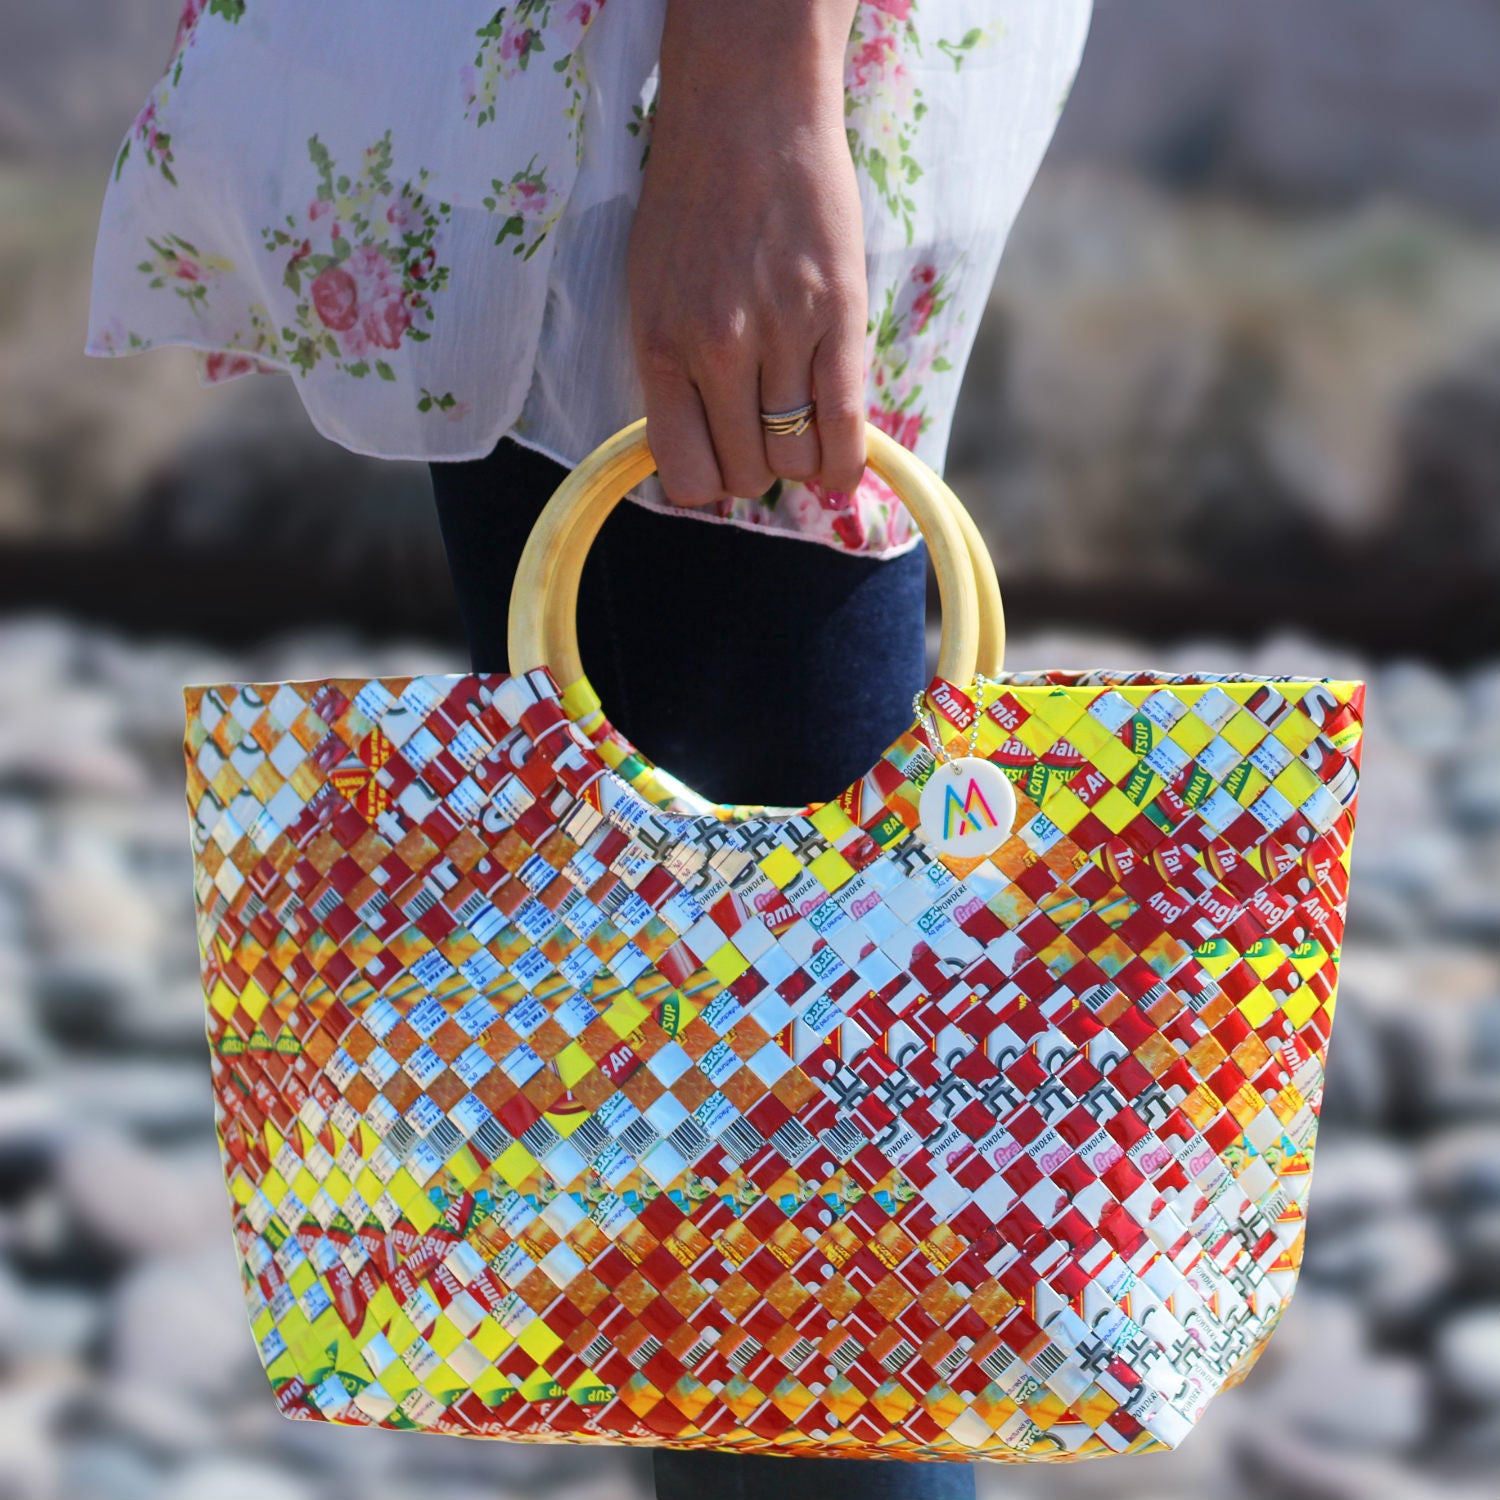 Stunning Photos of Purses, Handbags Made of Recycled Materials